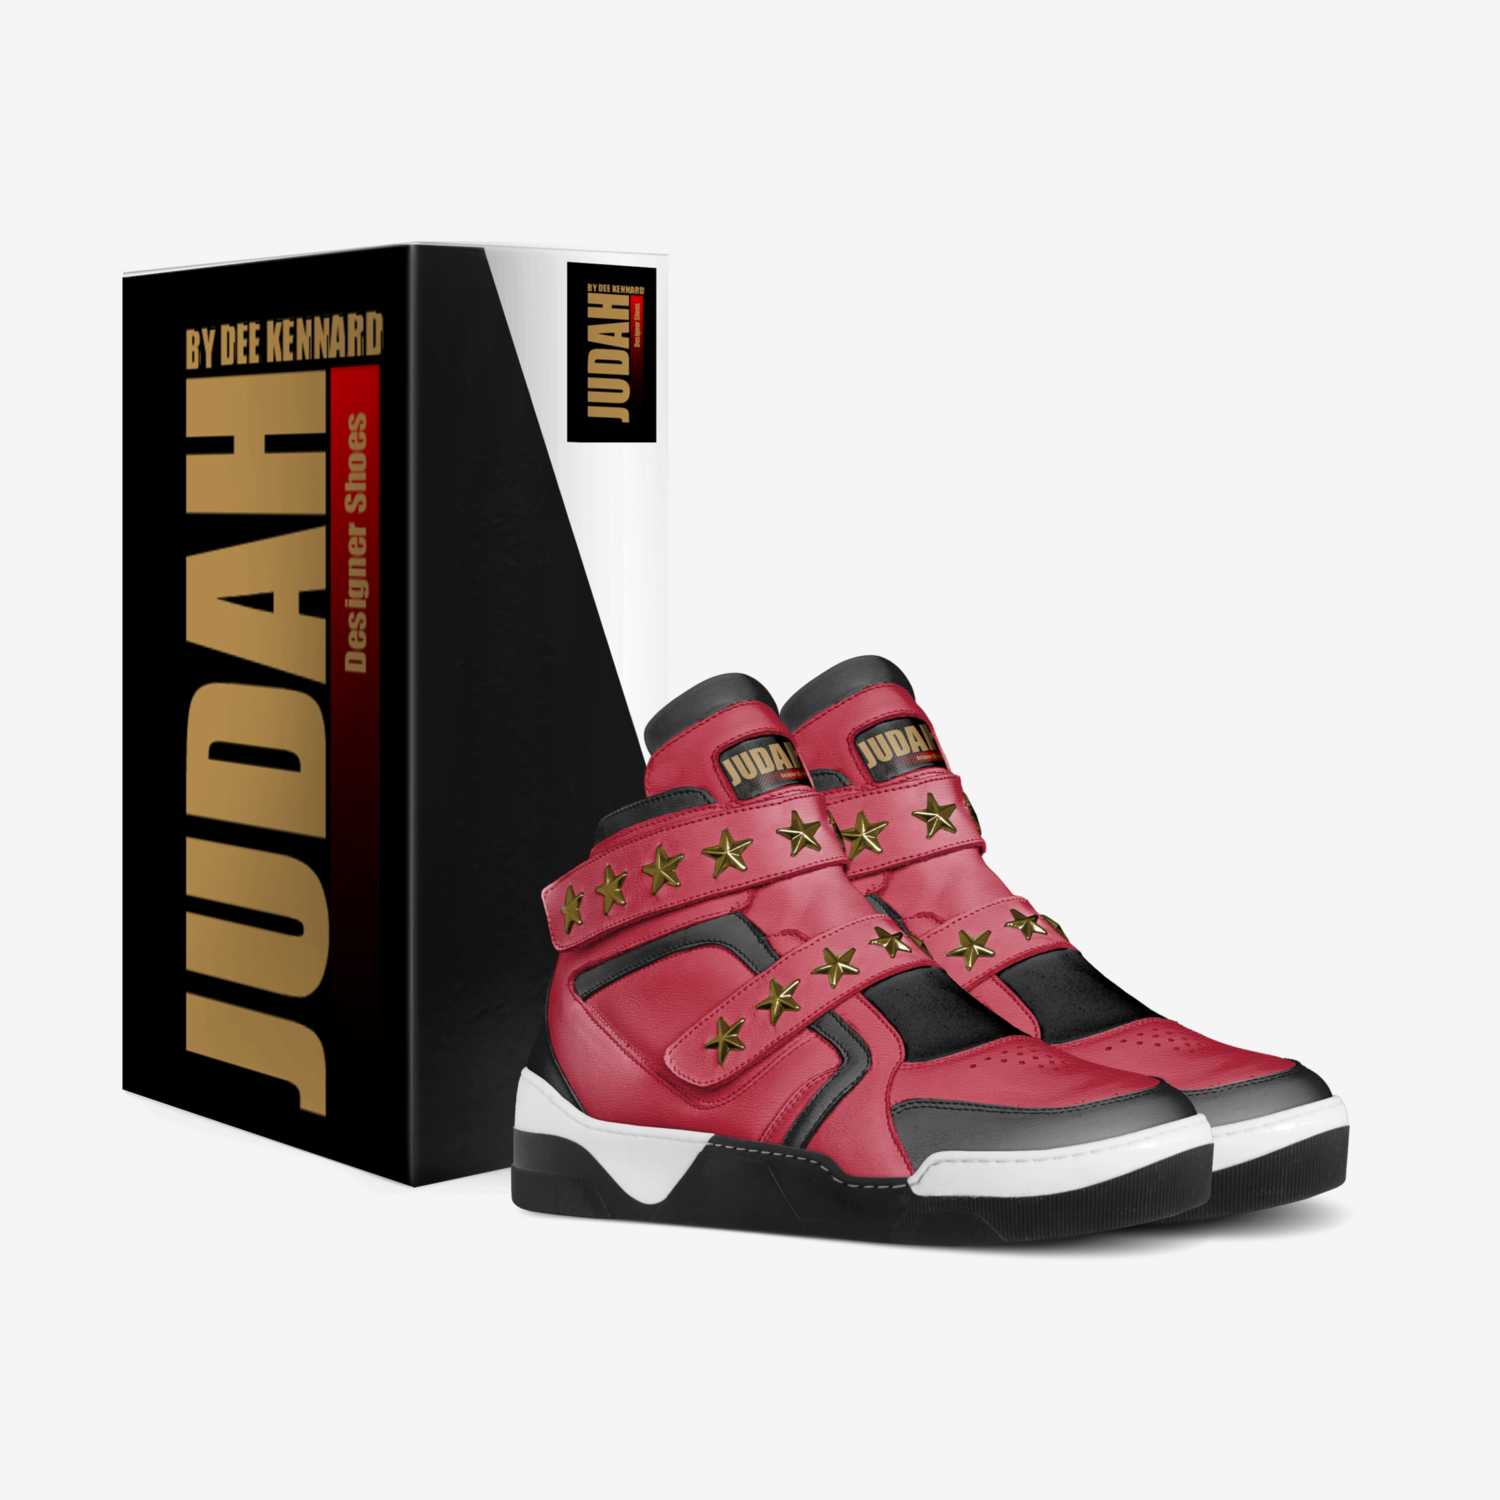 Judahwear PhantomX custom made in Italy shoes by Dee Kennard | Box view